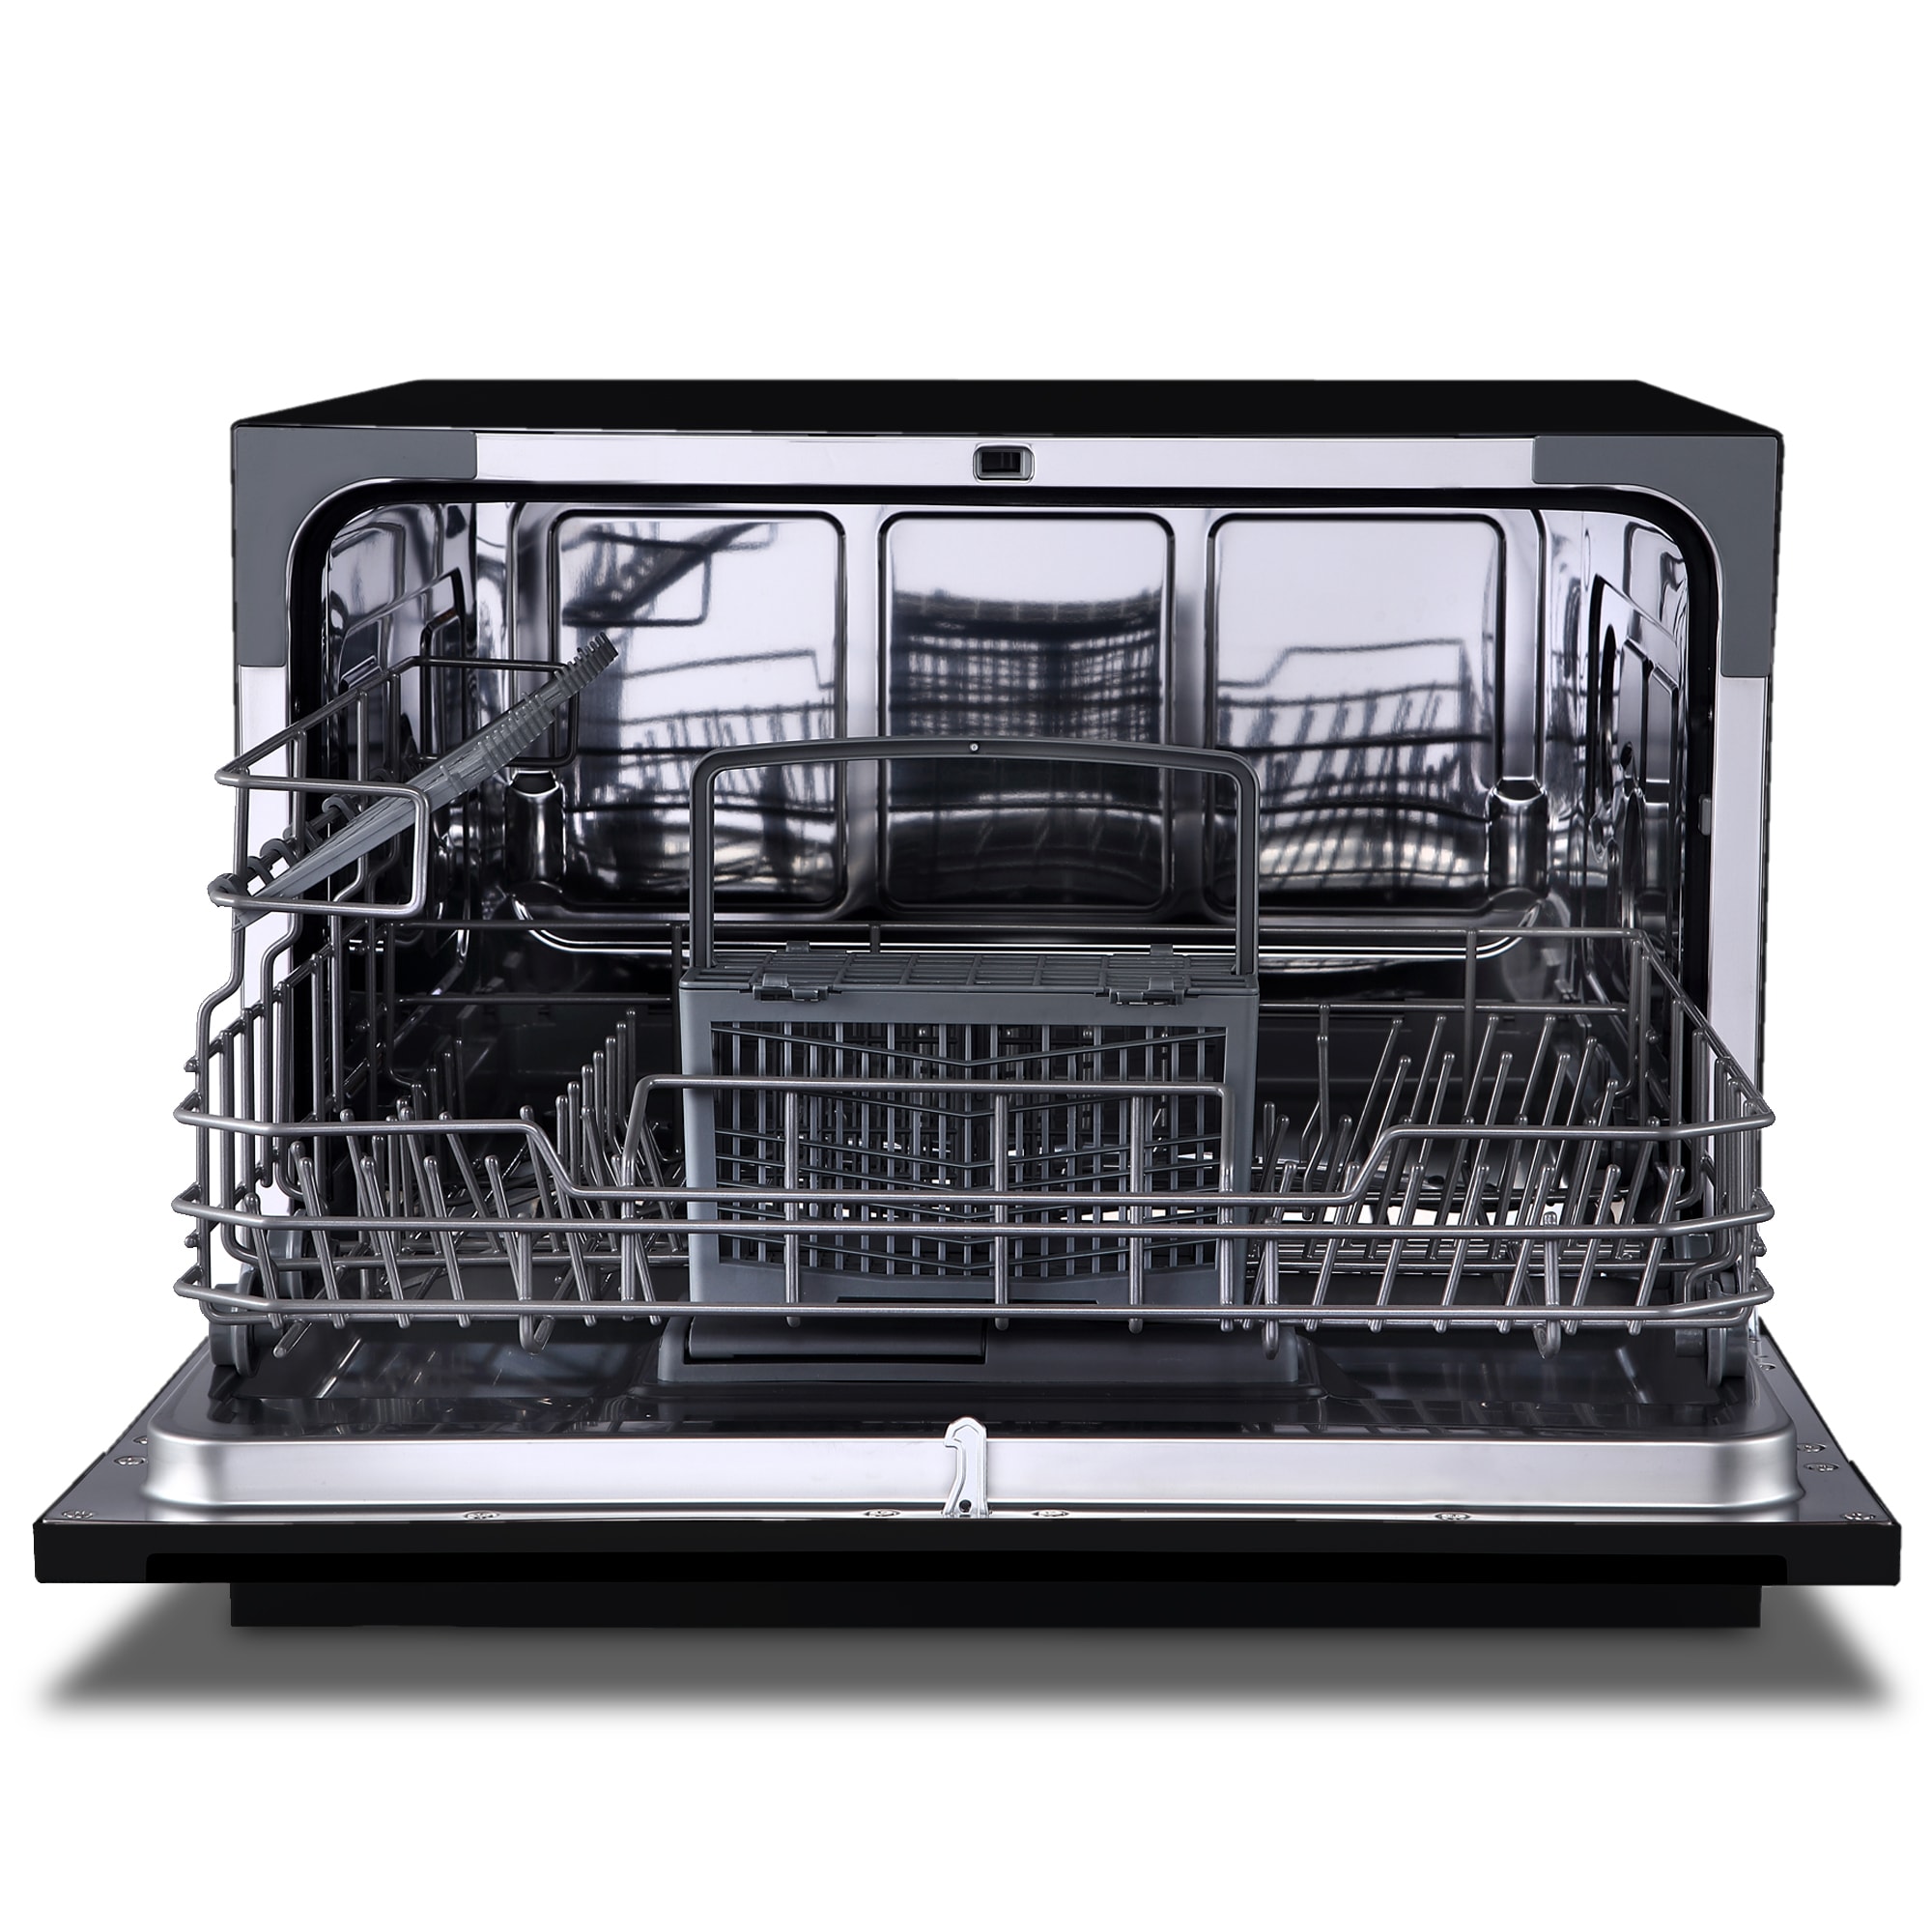 Farberware 19.7-in Portable Countertop Dishwasher (Black) in the